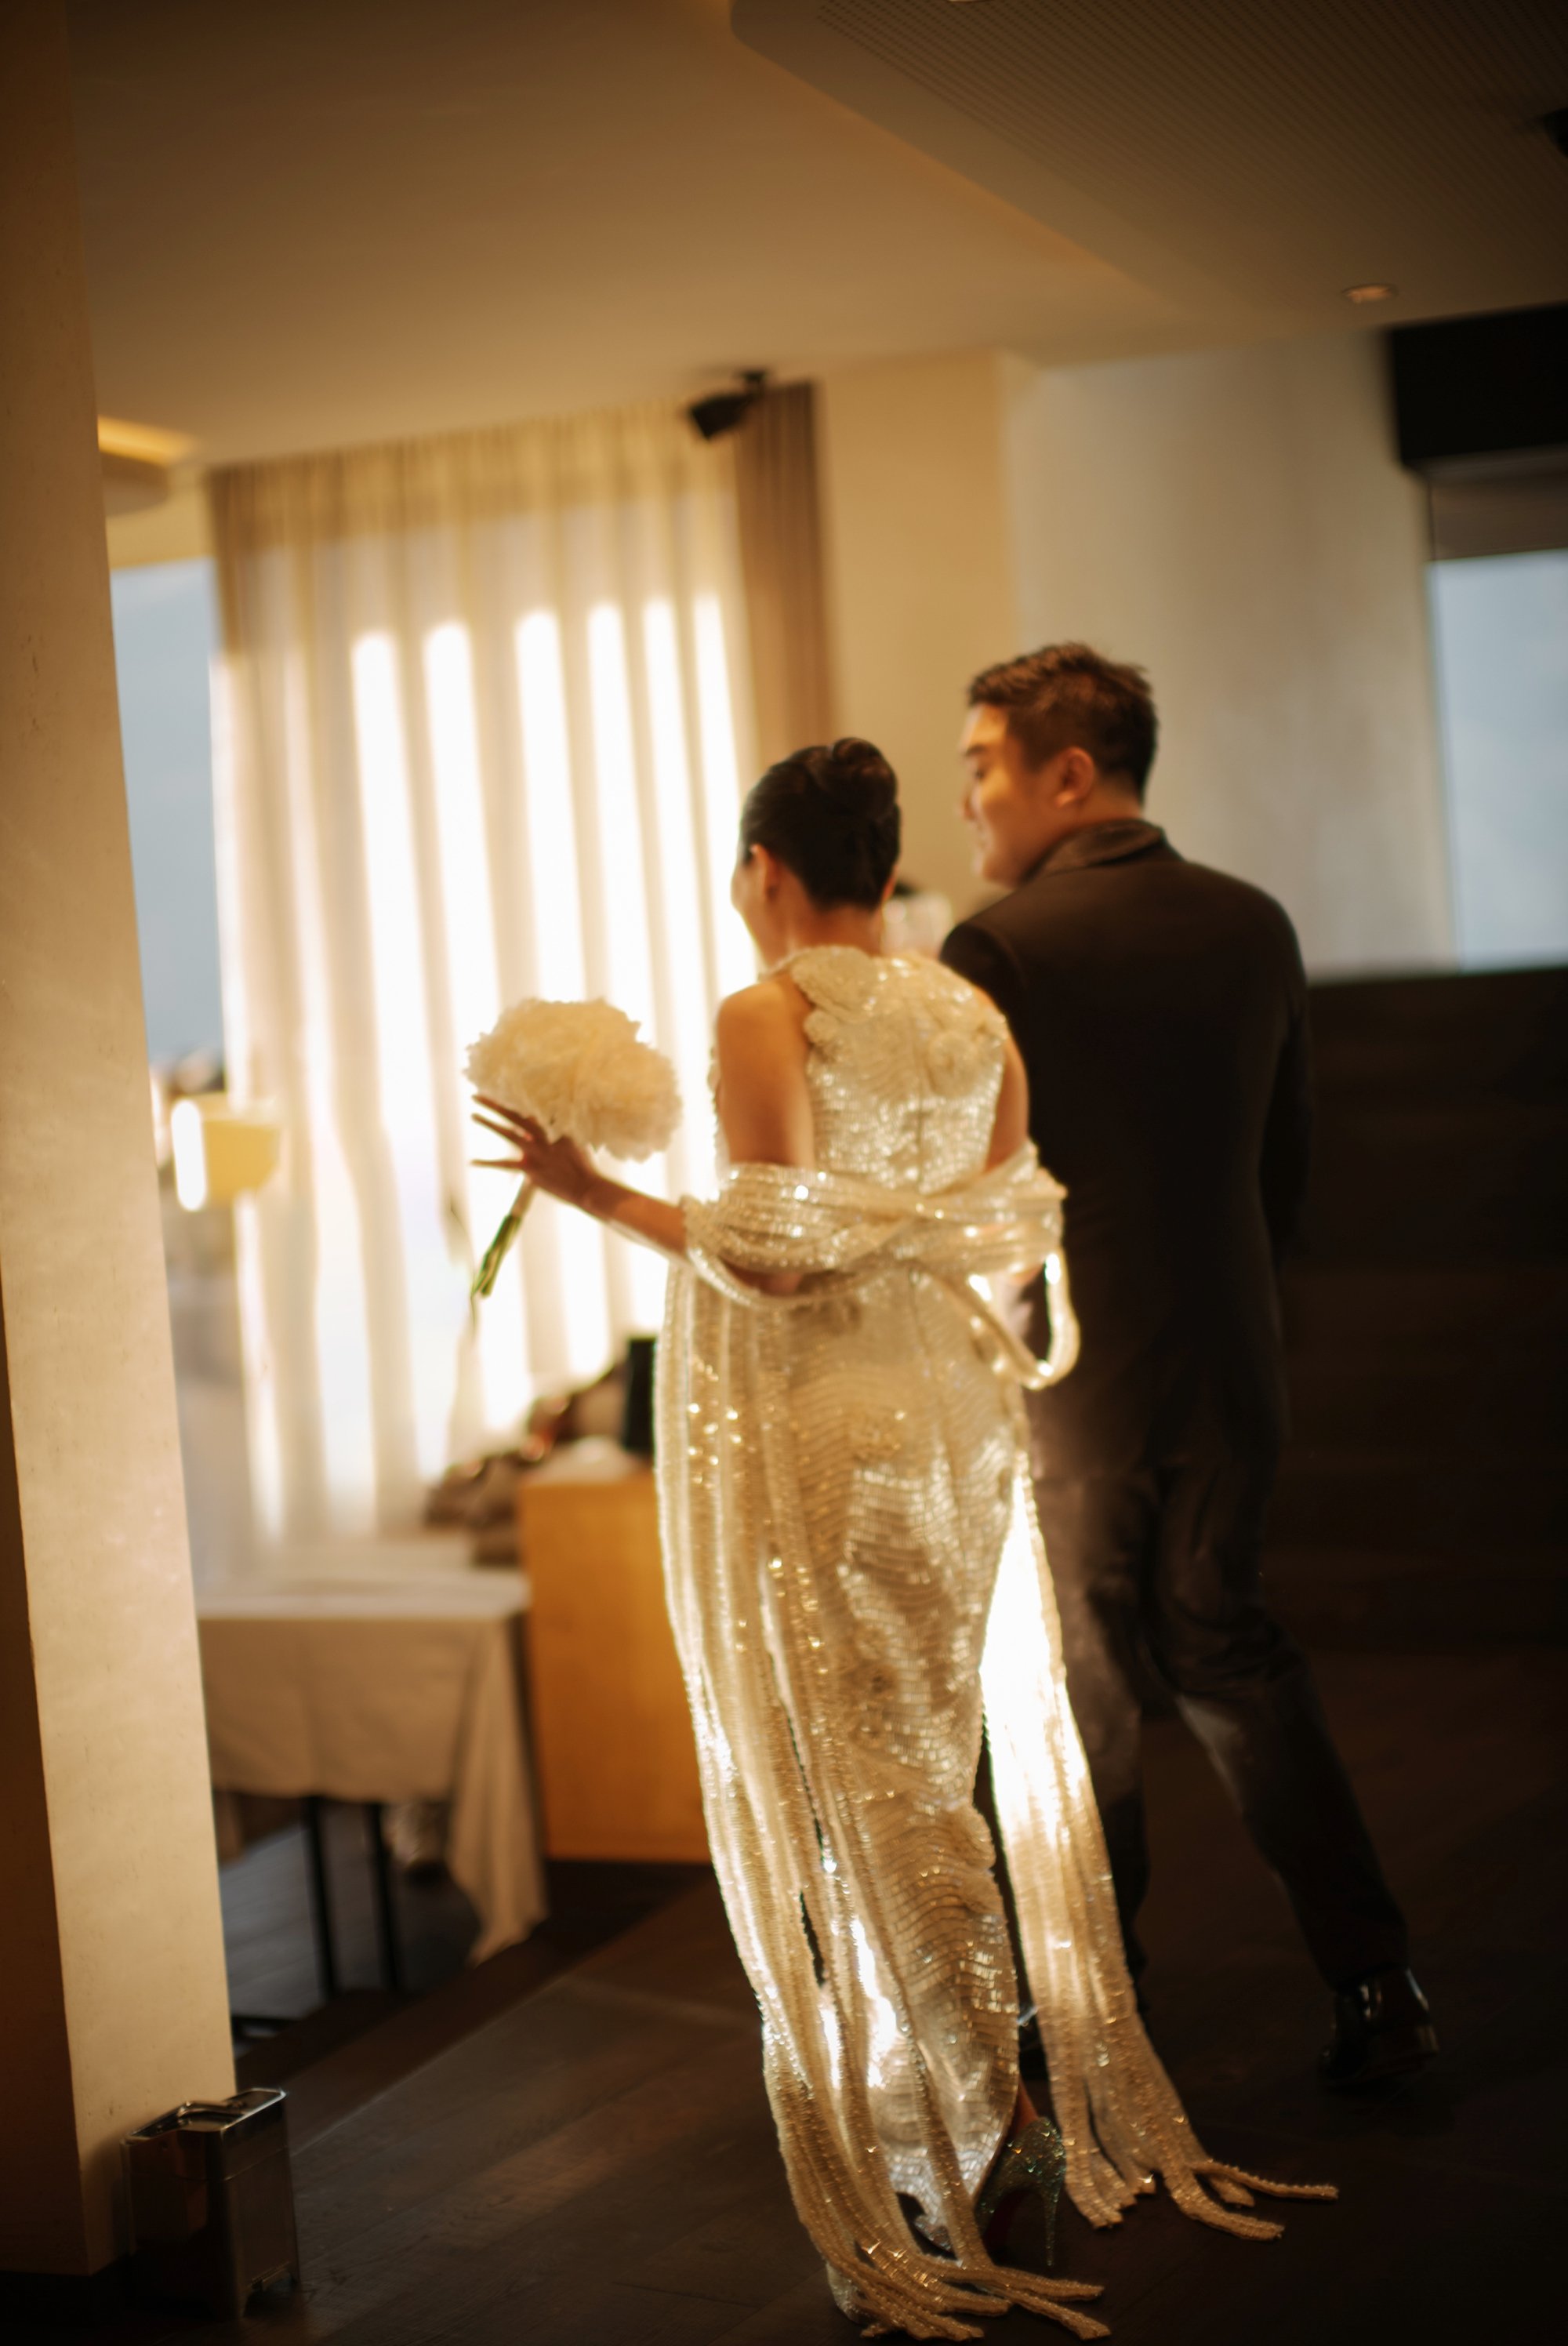 Prawira-Evelyn-Dolomites-Italy-Santre wedding-Yefta Gunawan-Jeriko MUA-Carol Kuntjoro Photography-110.jpg